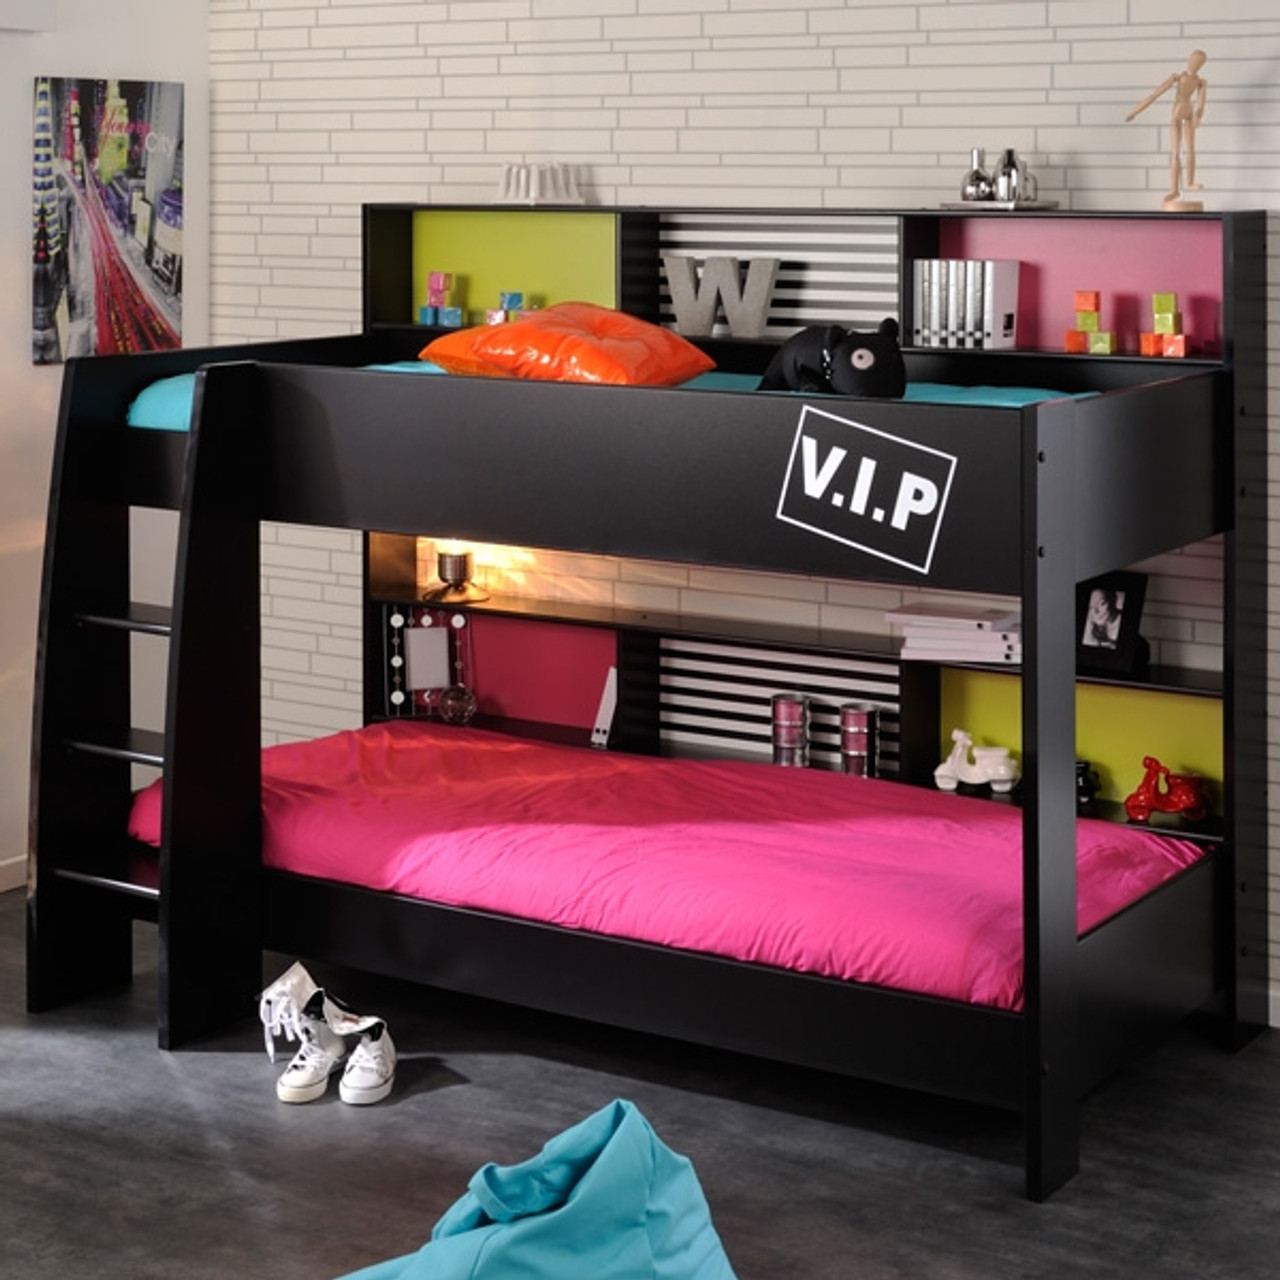 Paco Black Bunk Bed With Storage Kids Rooms